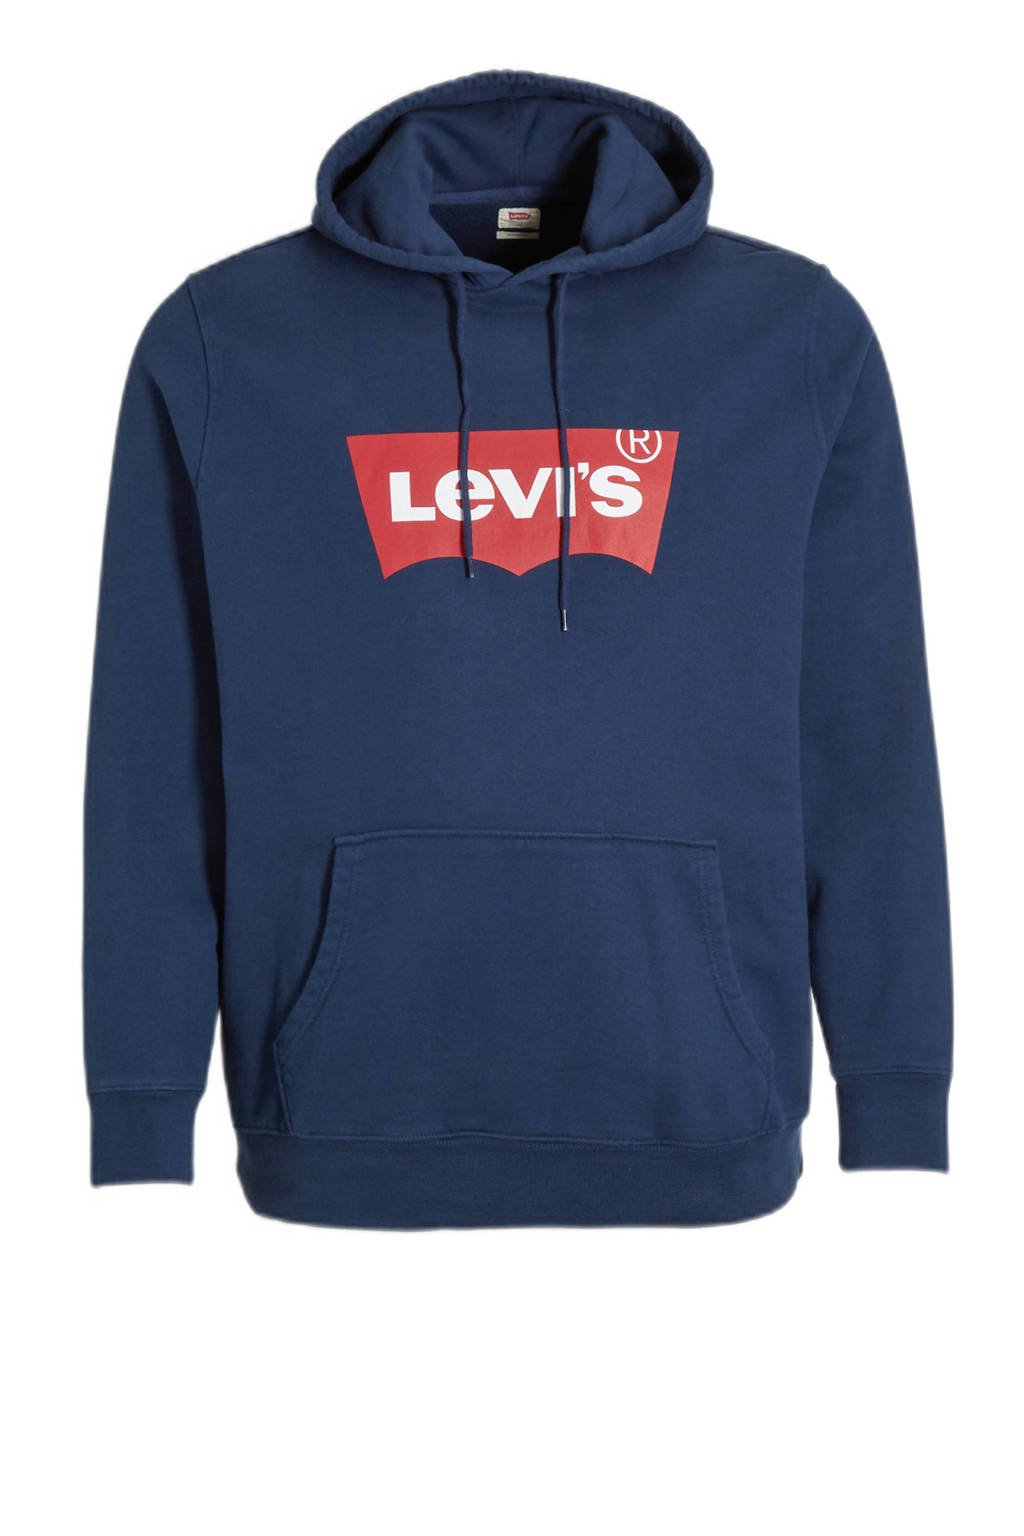 Levi's Big and Tall hoodie Plus Size met logo dress blues